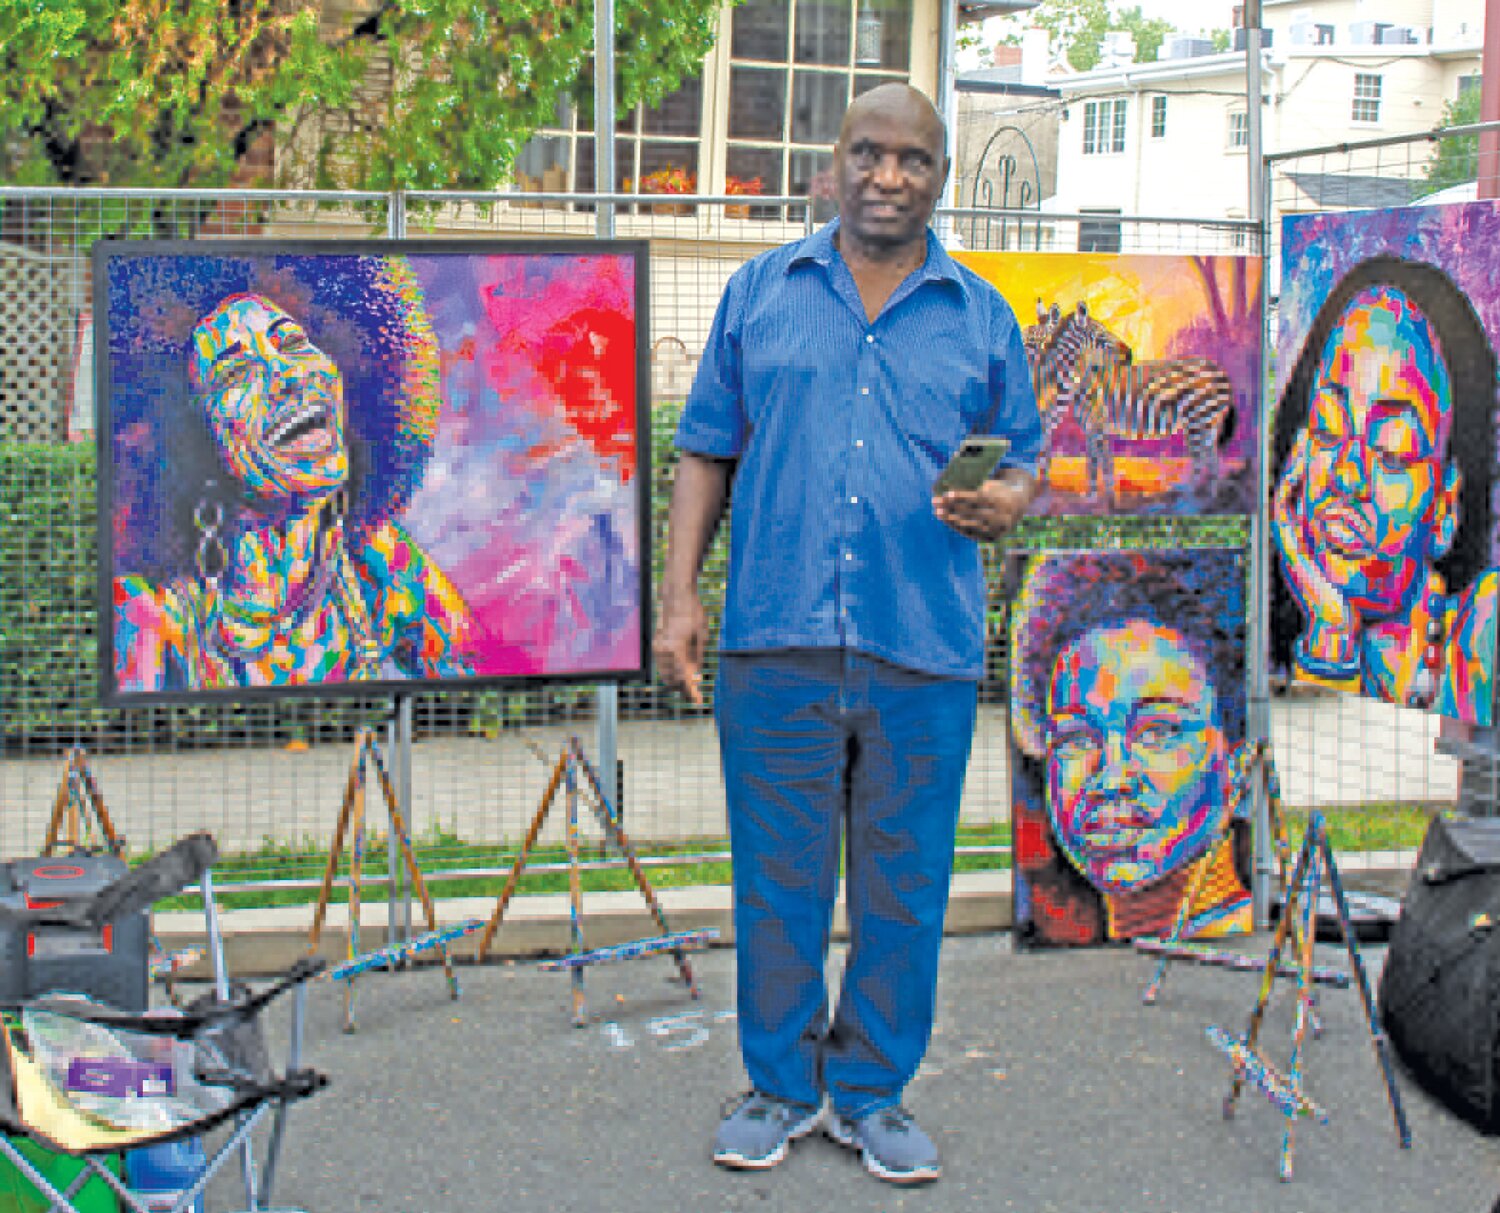 Charles Kezengwa displays his work at the Kezengwa African Art booth.